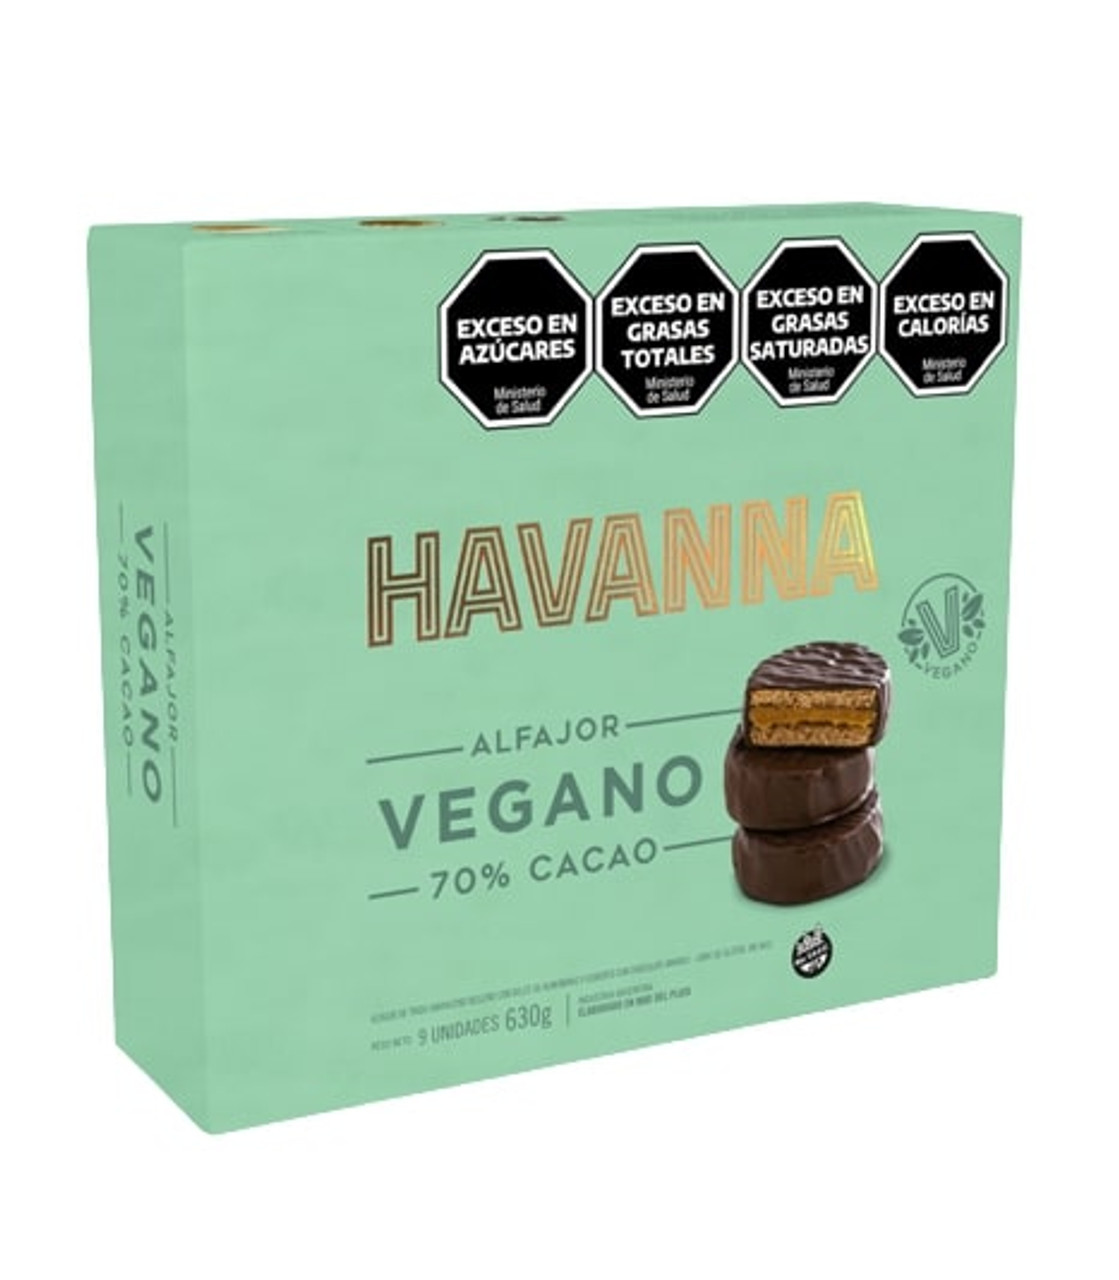 Havanna Vegan Alfajor 70% Chocolate Gluten-Free Cocoa with Almond